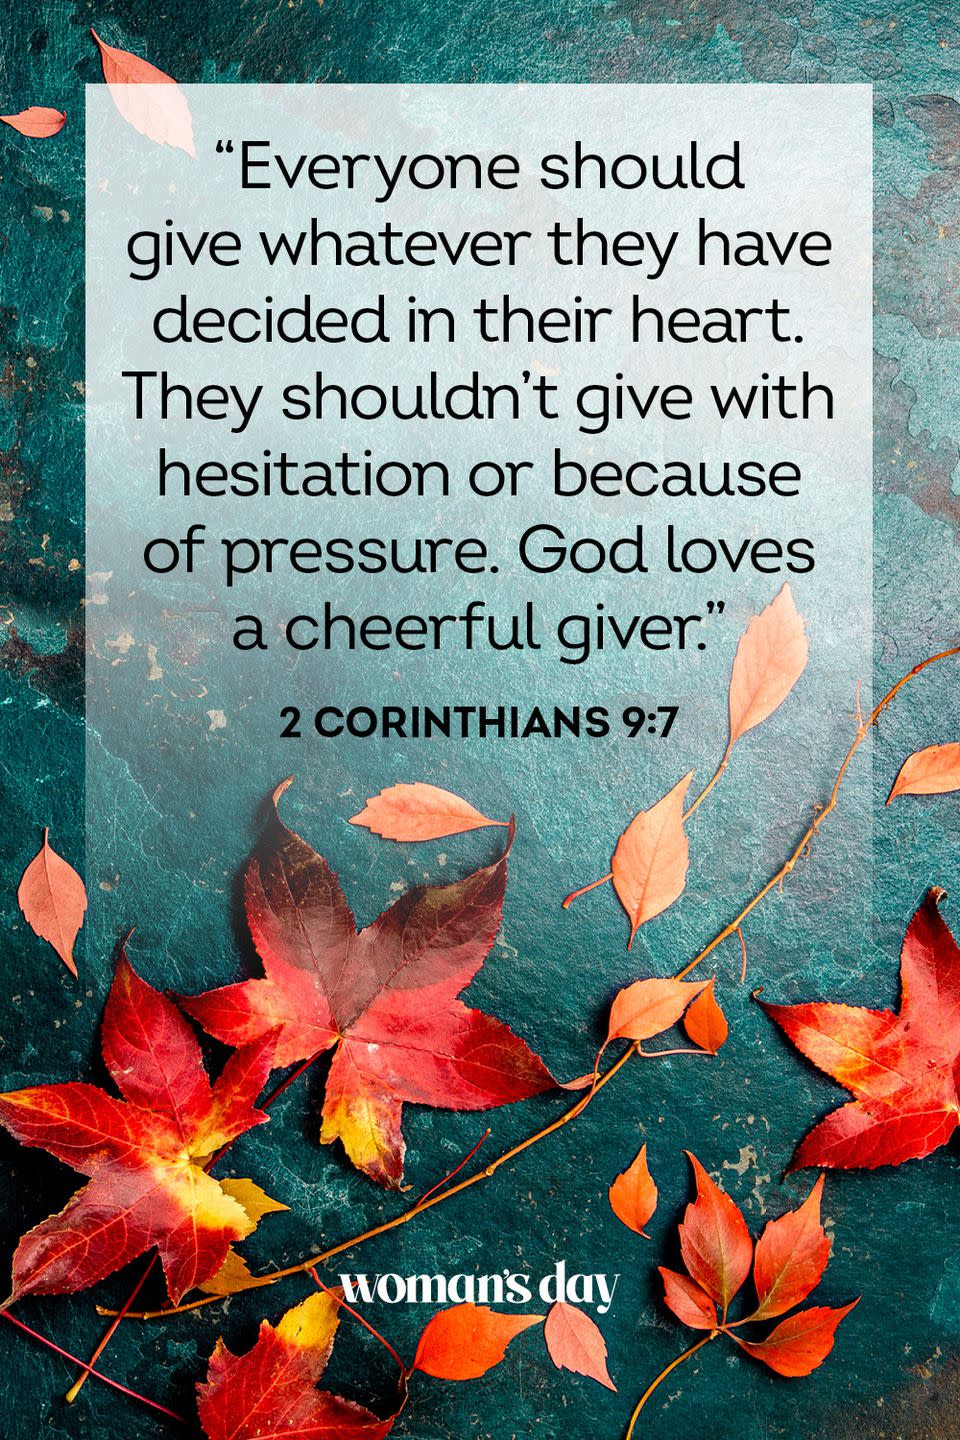 2 Corinthians 9:7